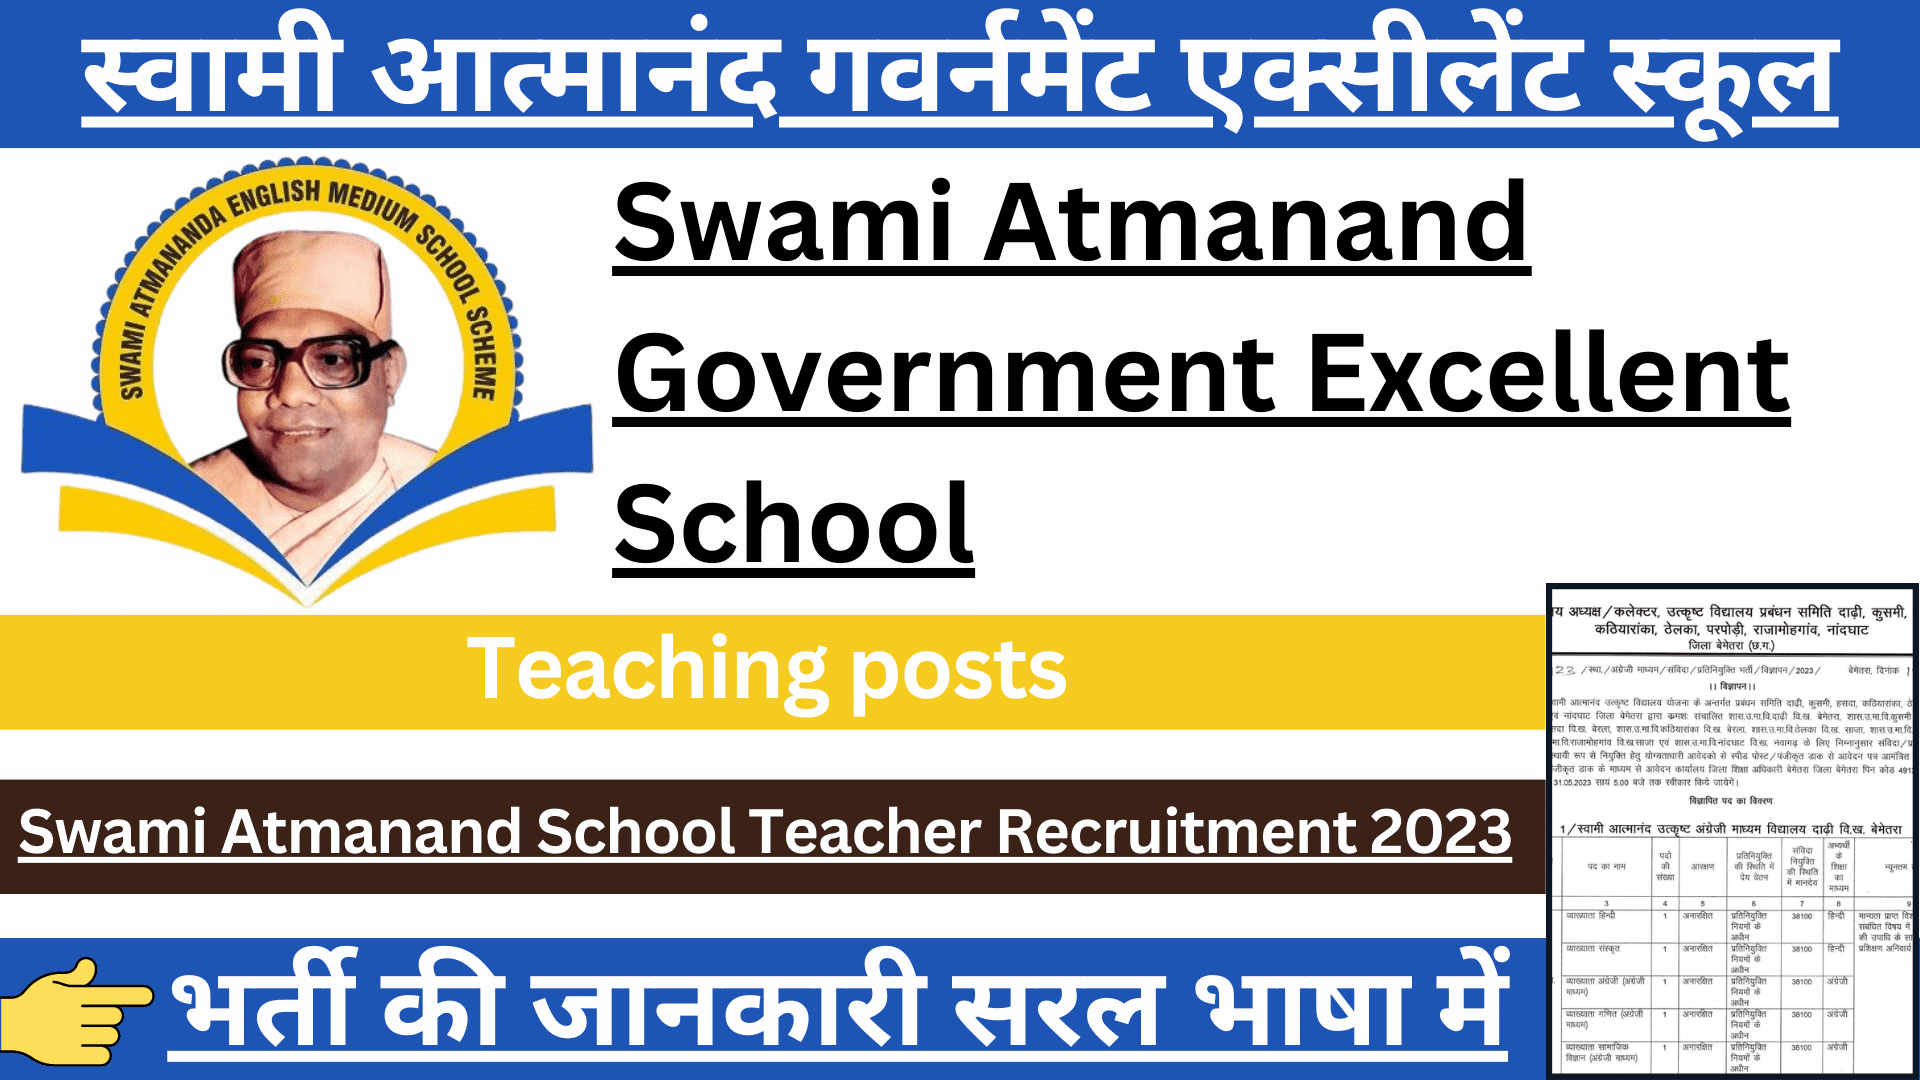 Swami Atmanand School Teacher Recruitment 2023